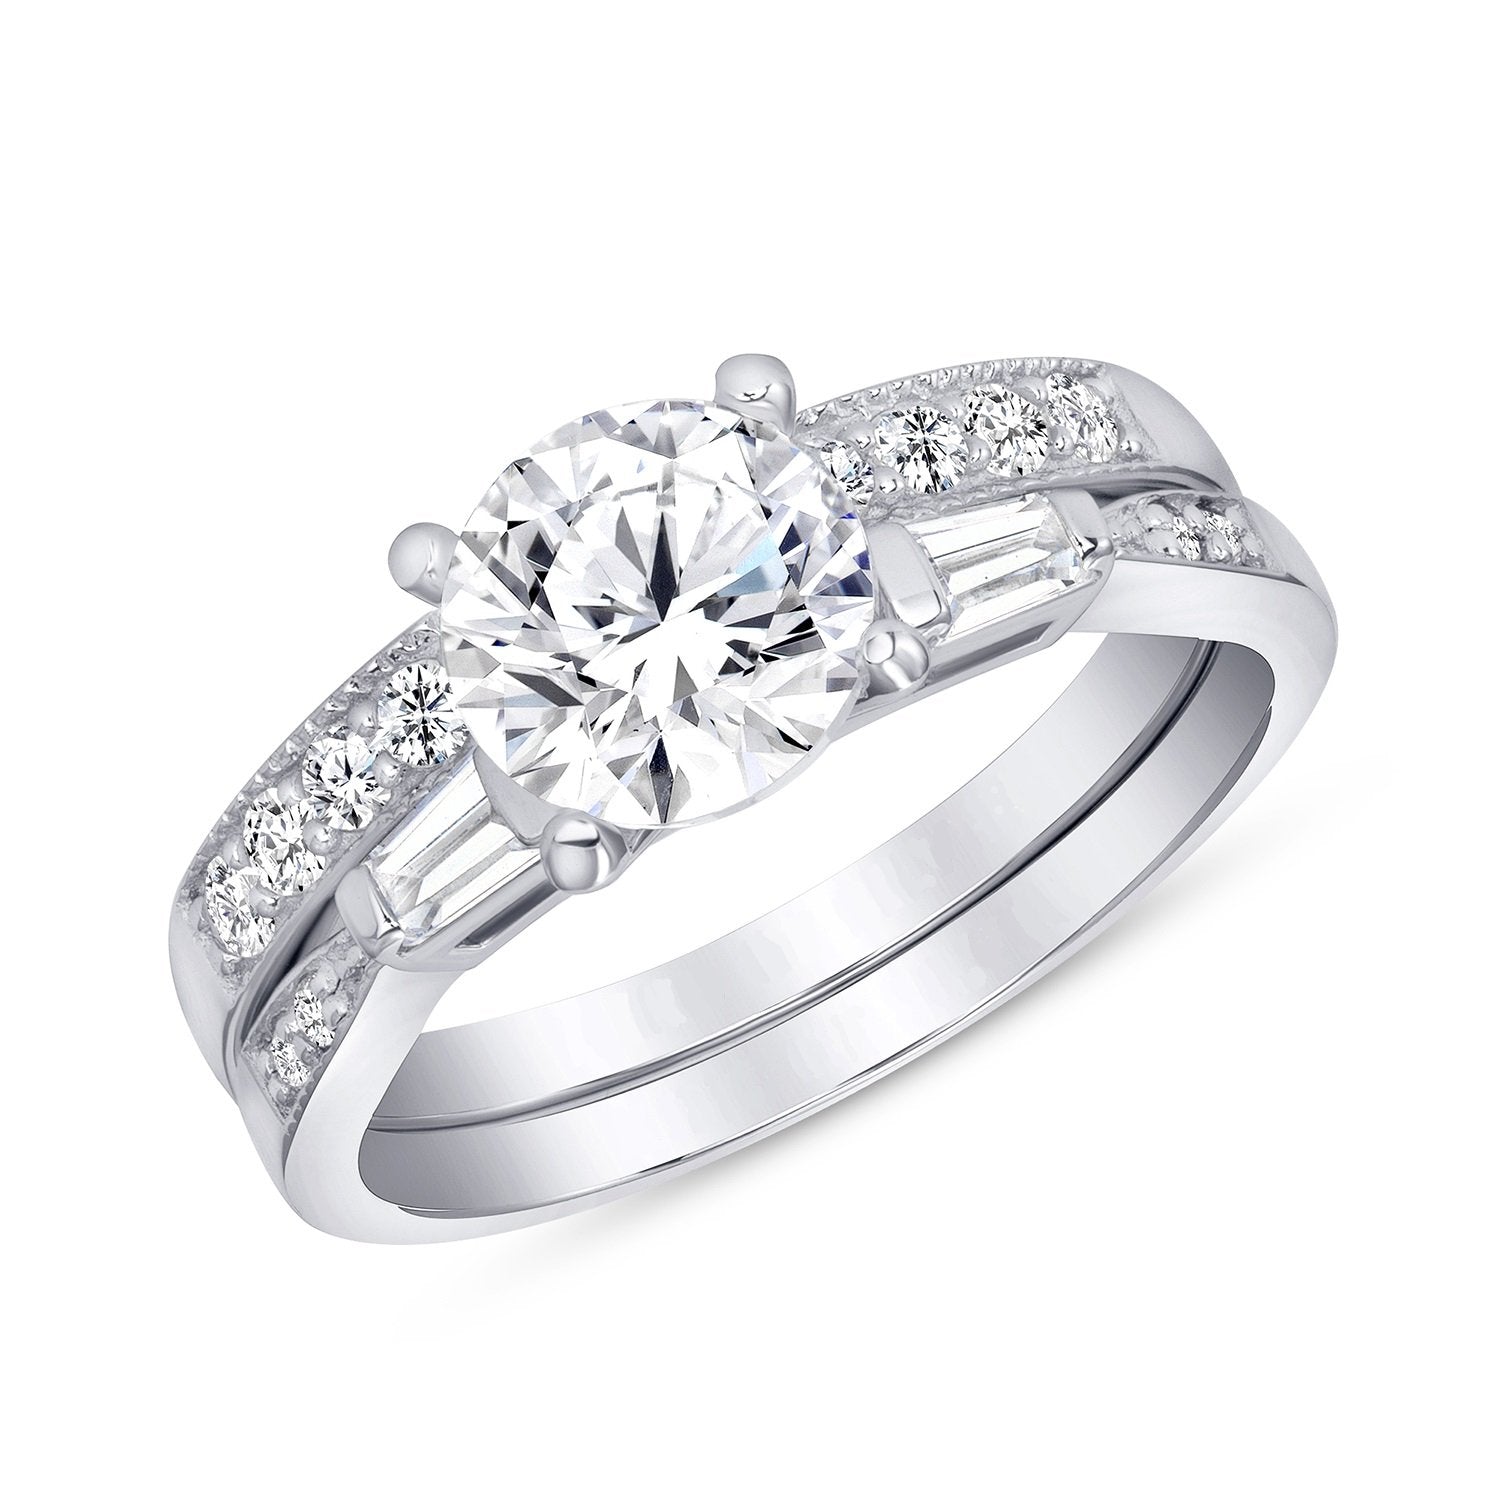 Sterling Silver 2 Wedding Ring Engagement Ring set